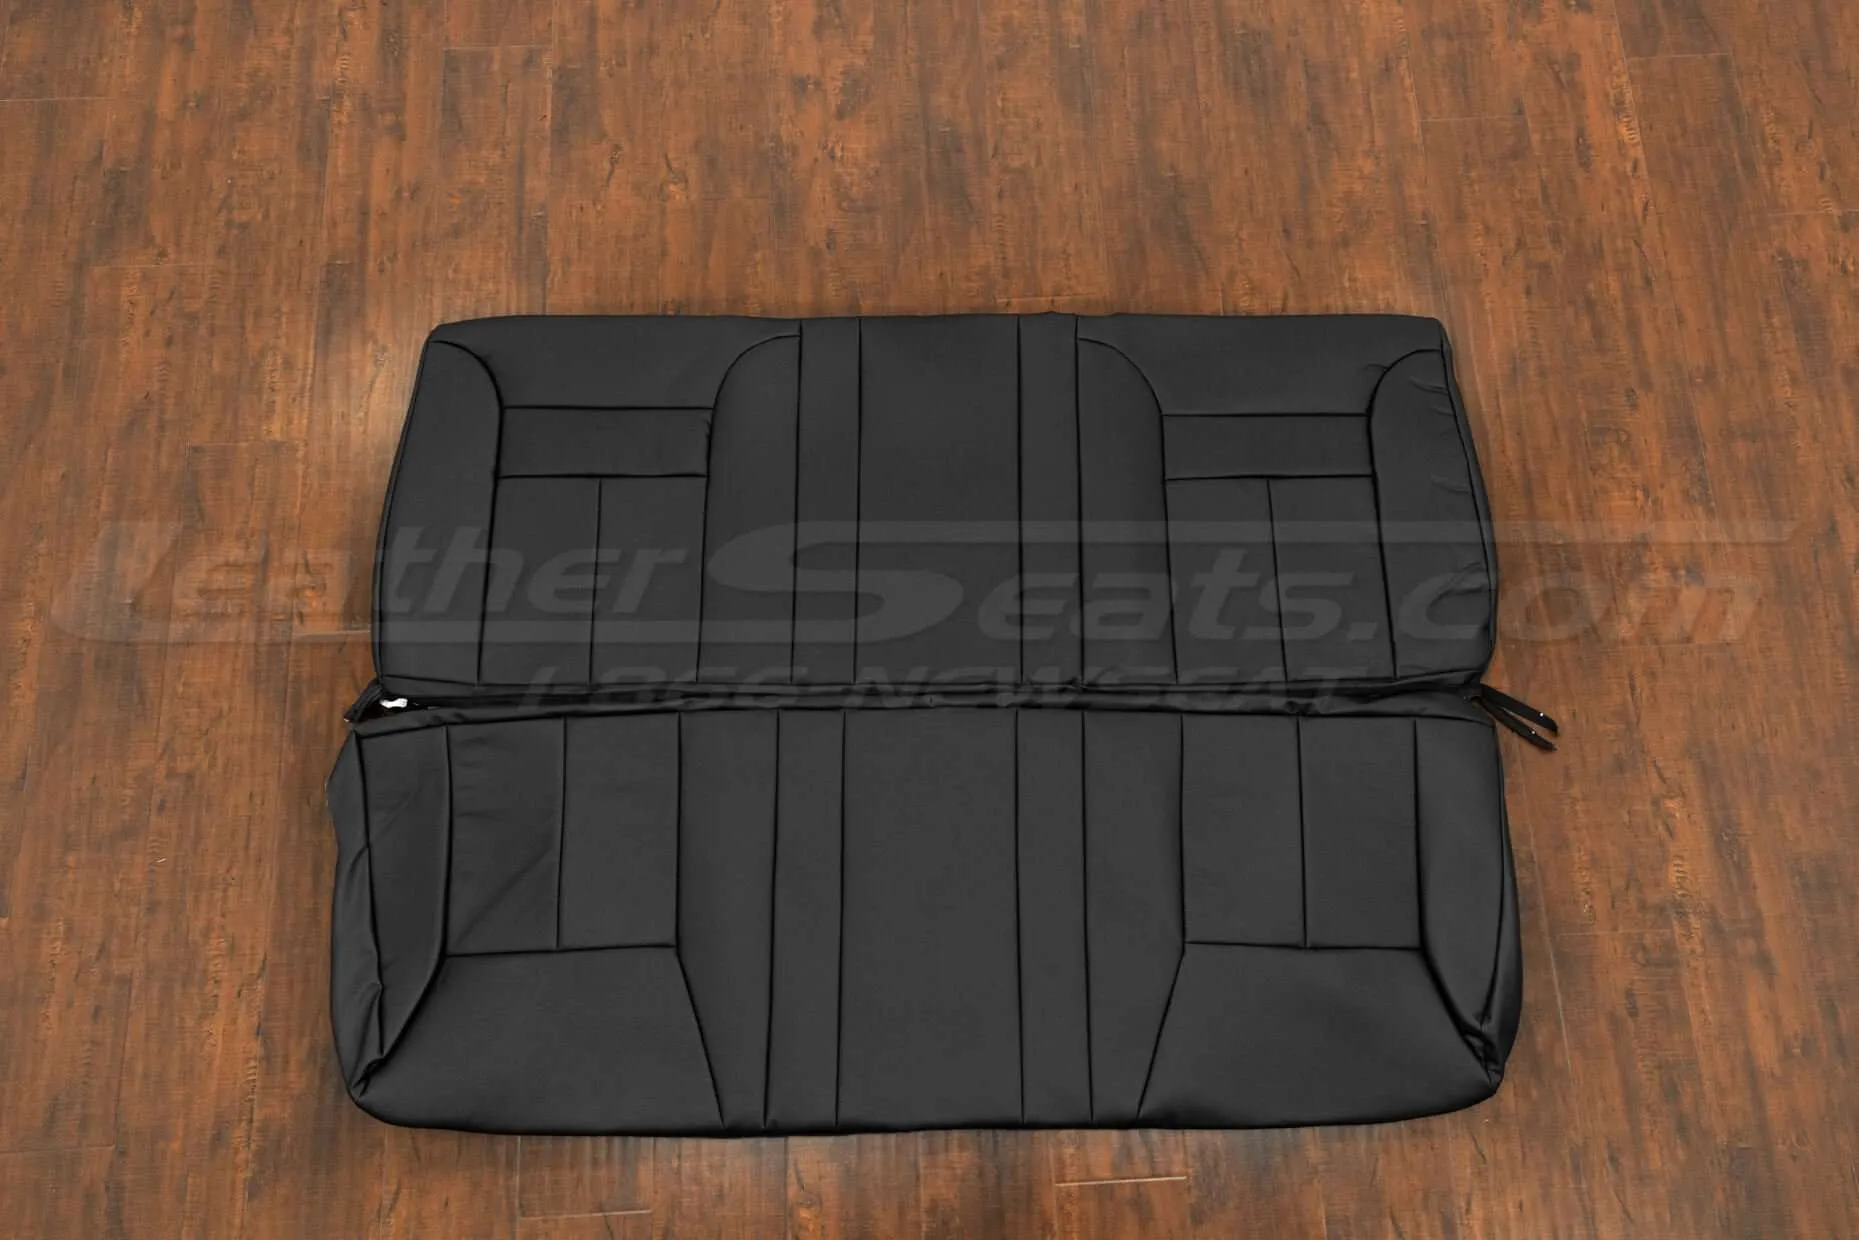 1999-2001 Dodge Ram Quad Cab Leather Kit - Black. - Rear seat upholstery